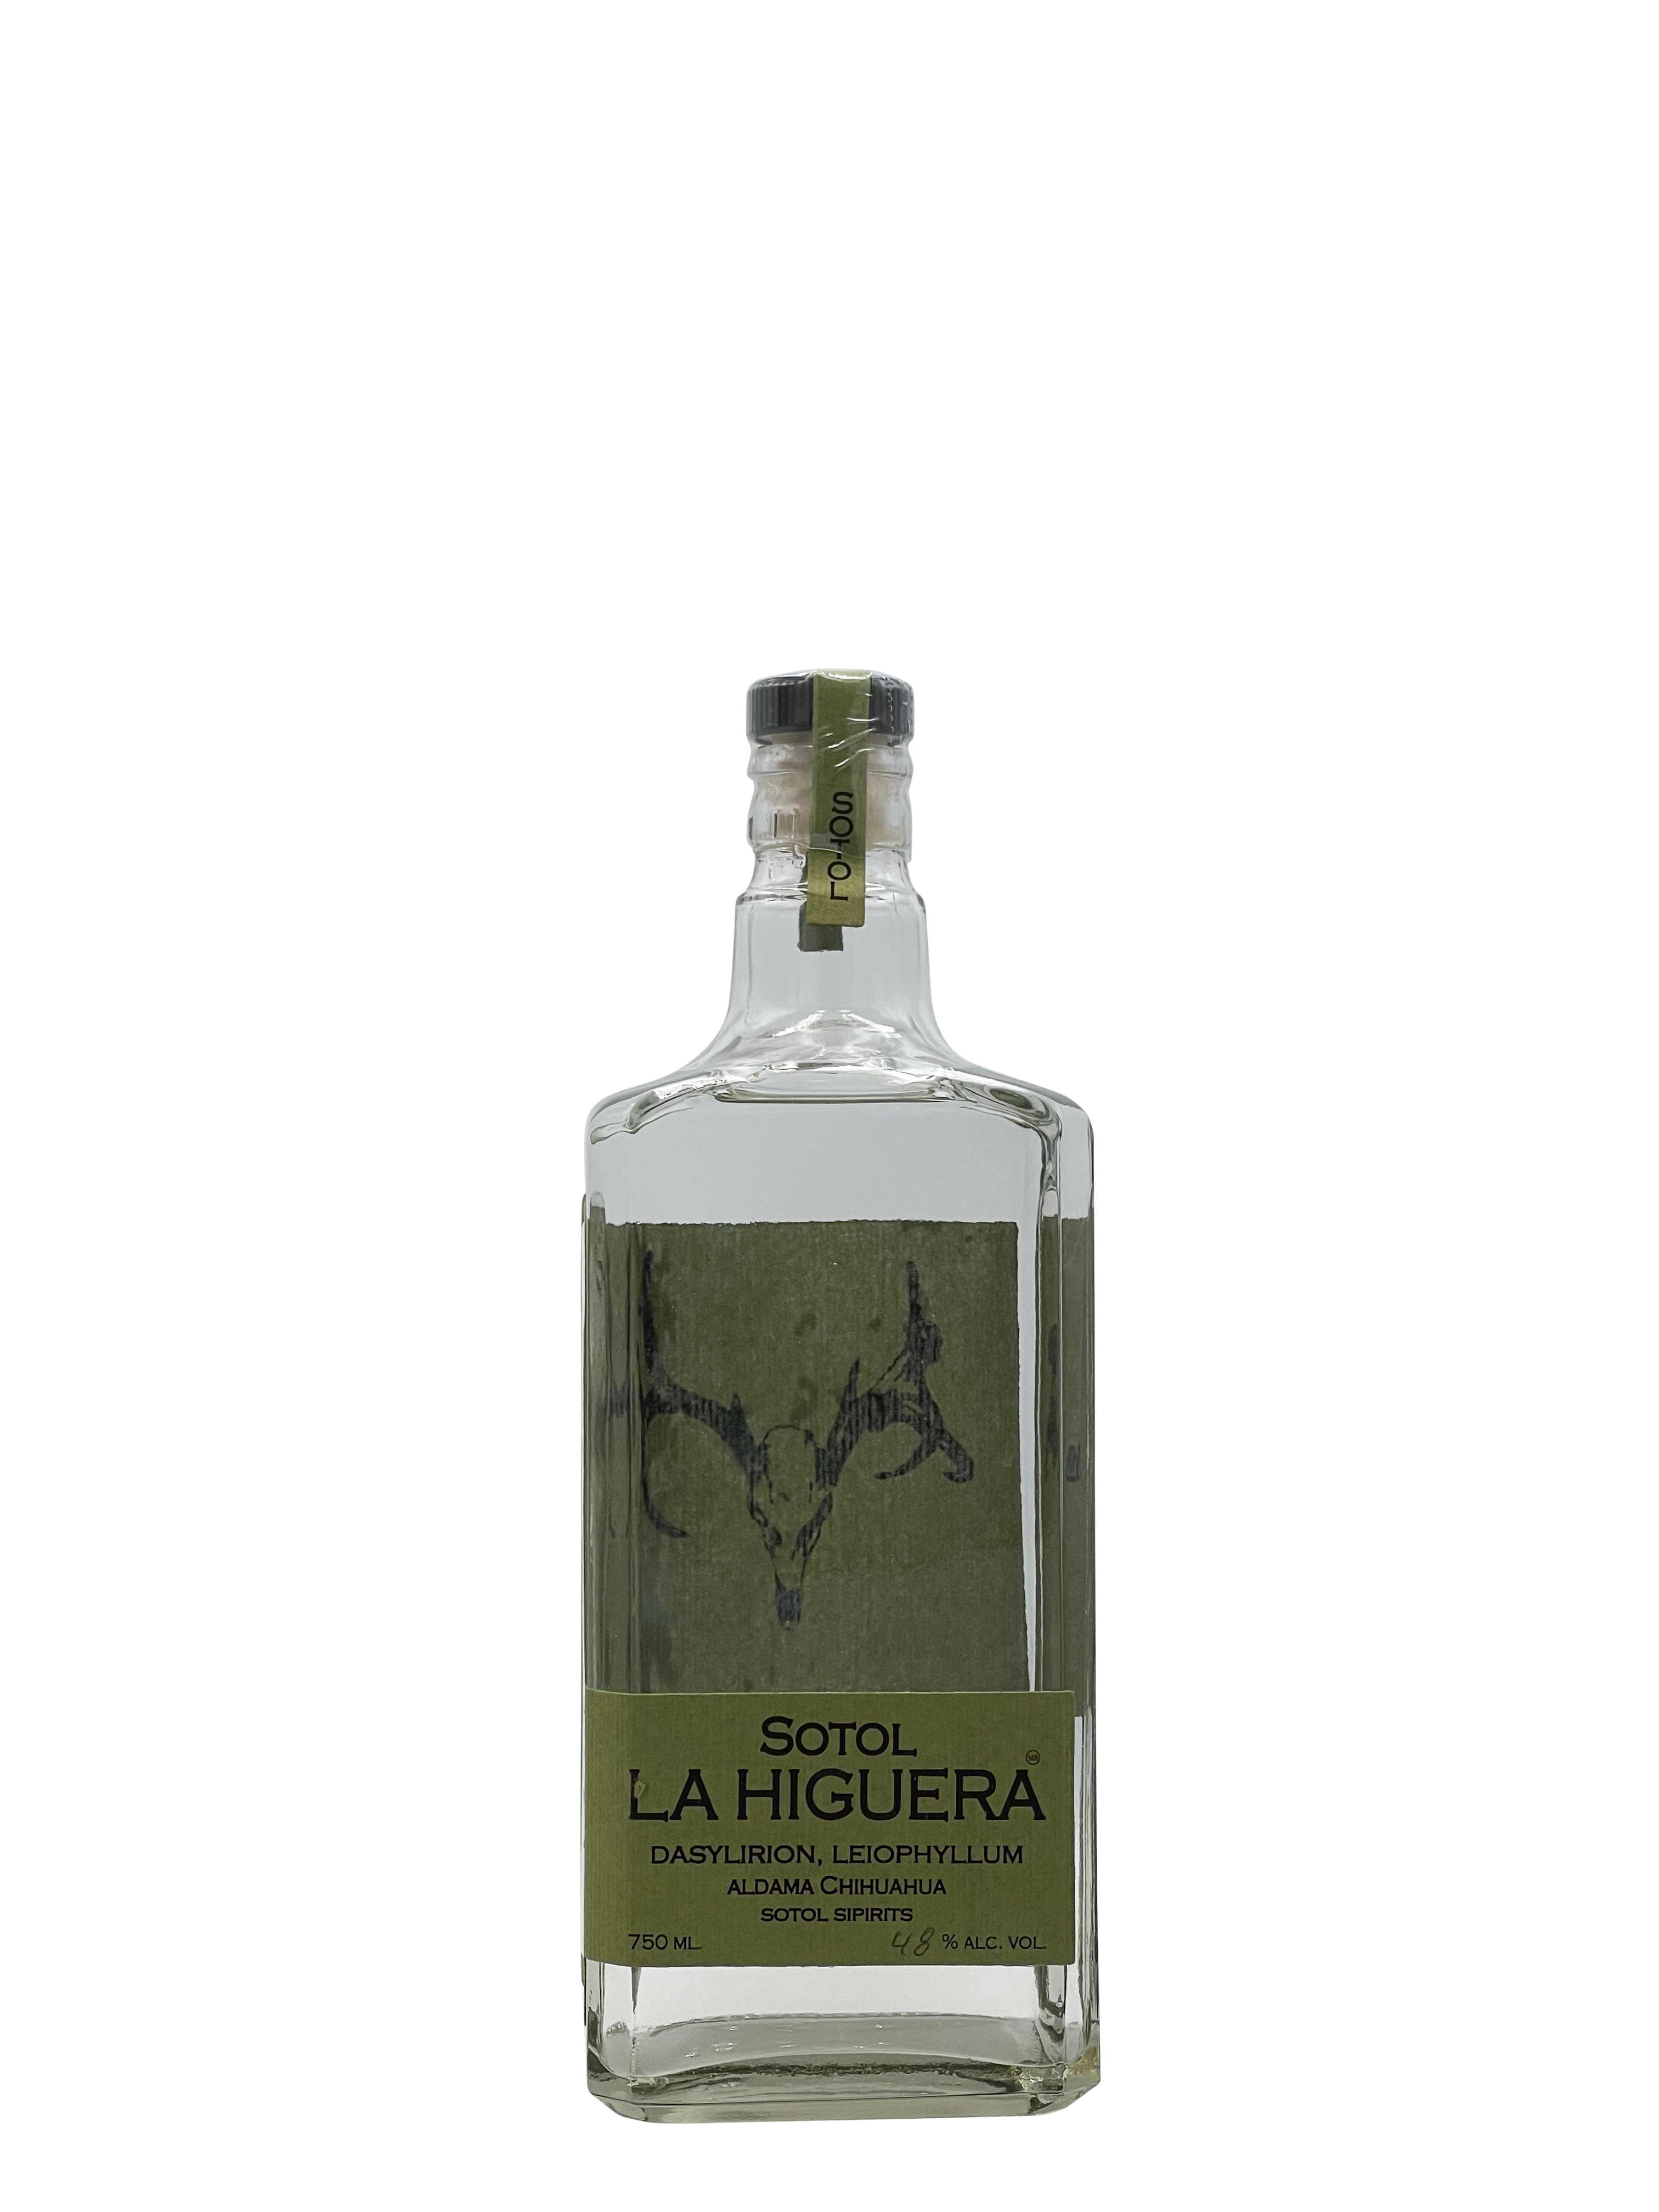 Sotol La Higuera "Leiophyllum," Chihuahua